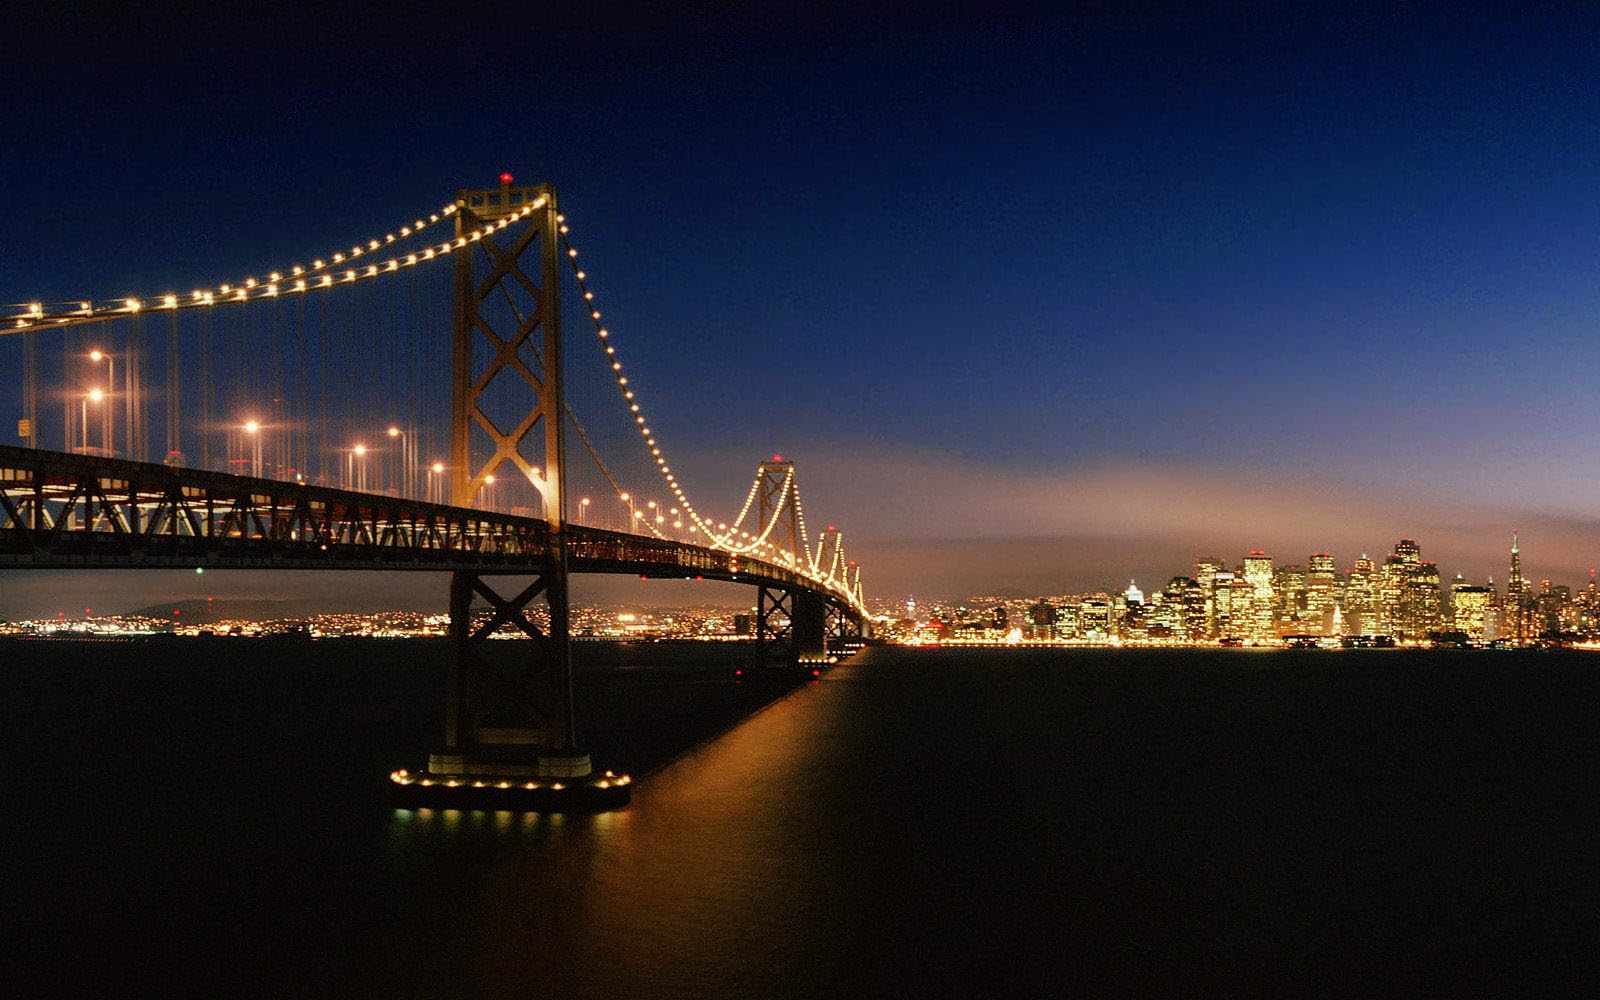 Tag San Francisco Bay Bridge Wallpaper Background Photos Image